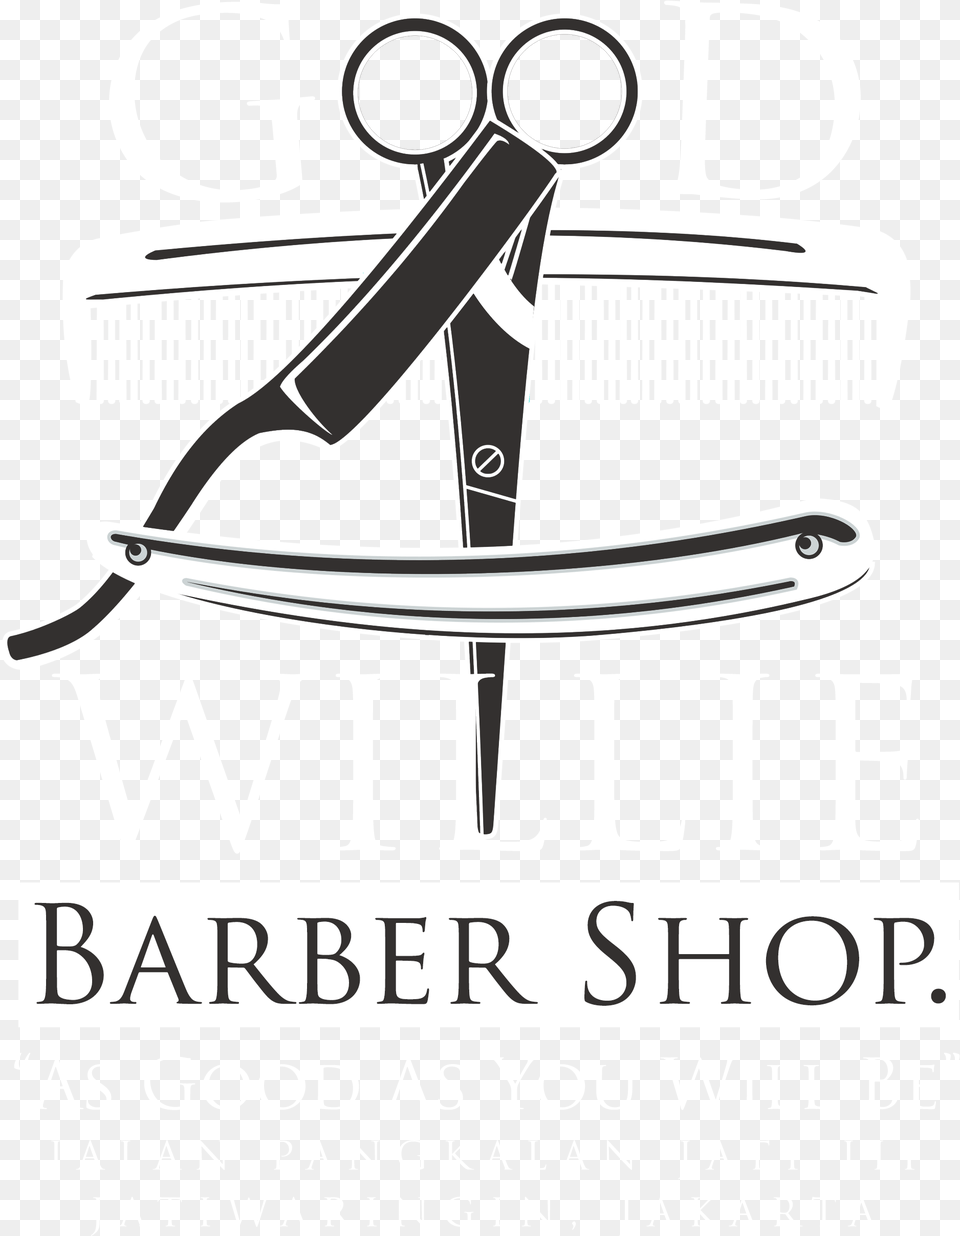 Source Static Tumblr Com Report Barber Shop Barber, Blade, Razor, Weapon, Advertisement Png Image